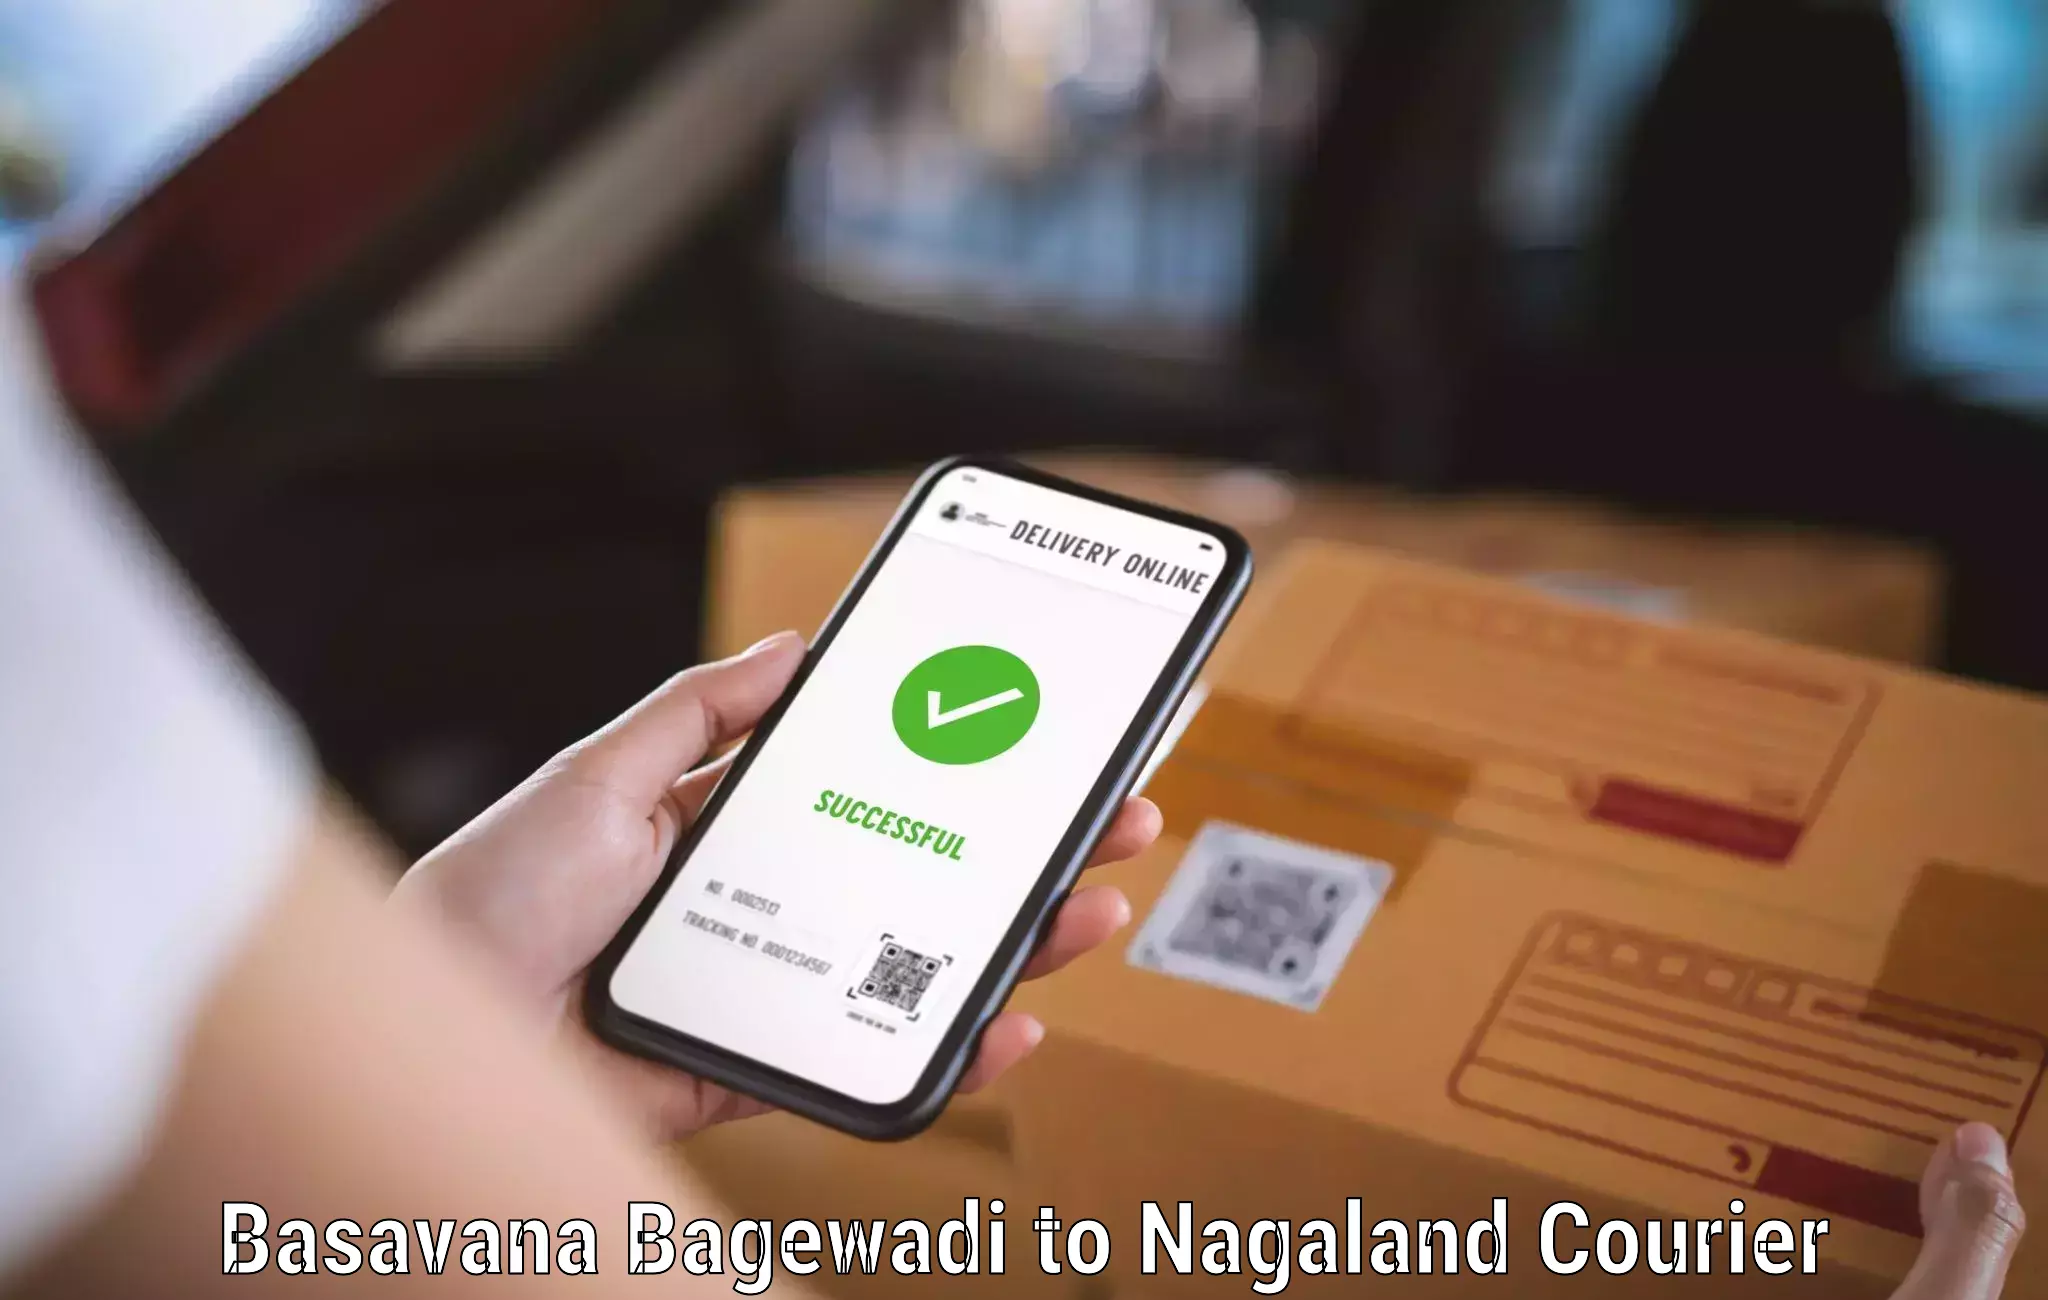 Business delivery service Basavana Bagewadi to Nagaland